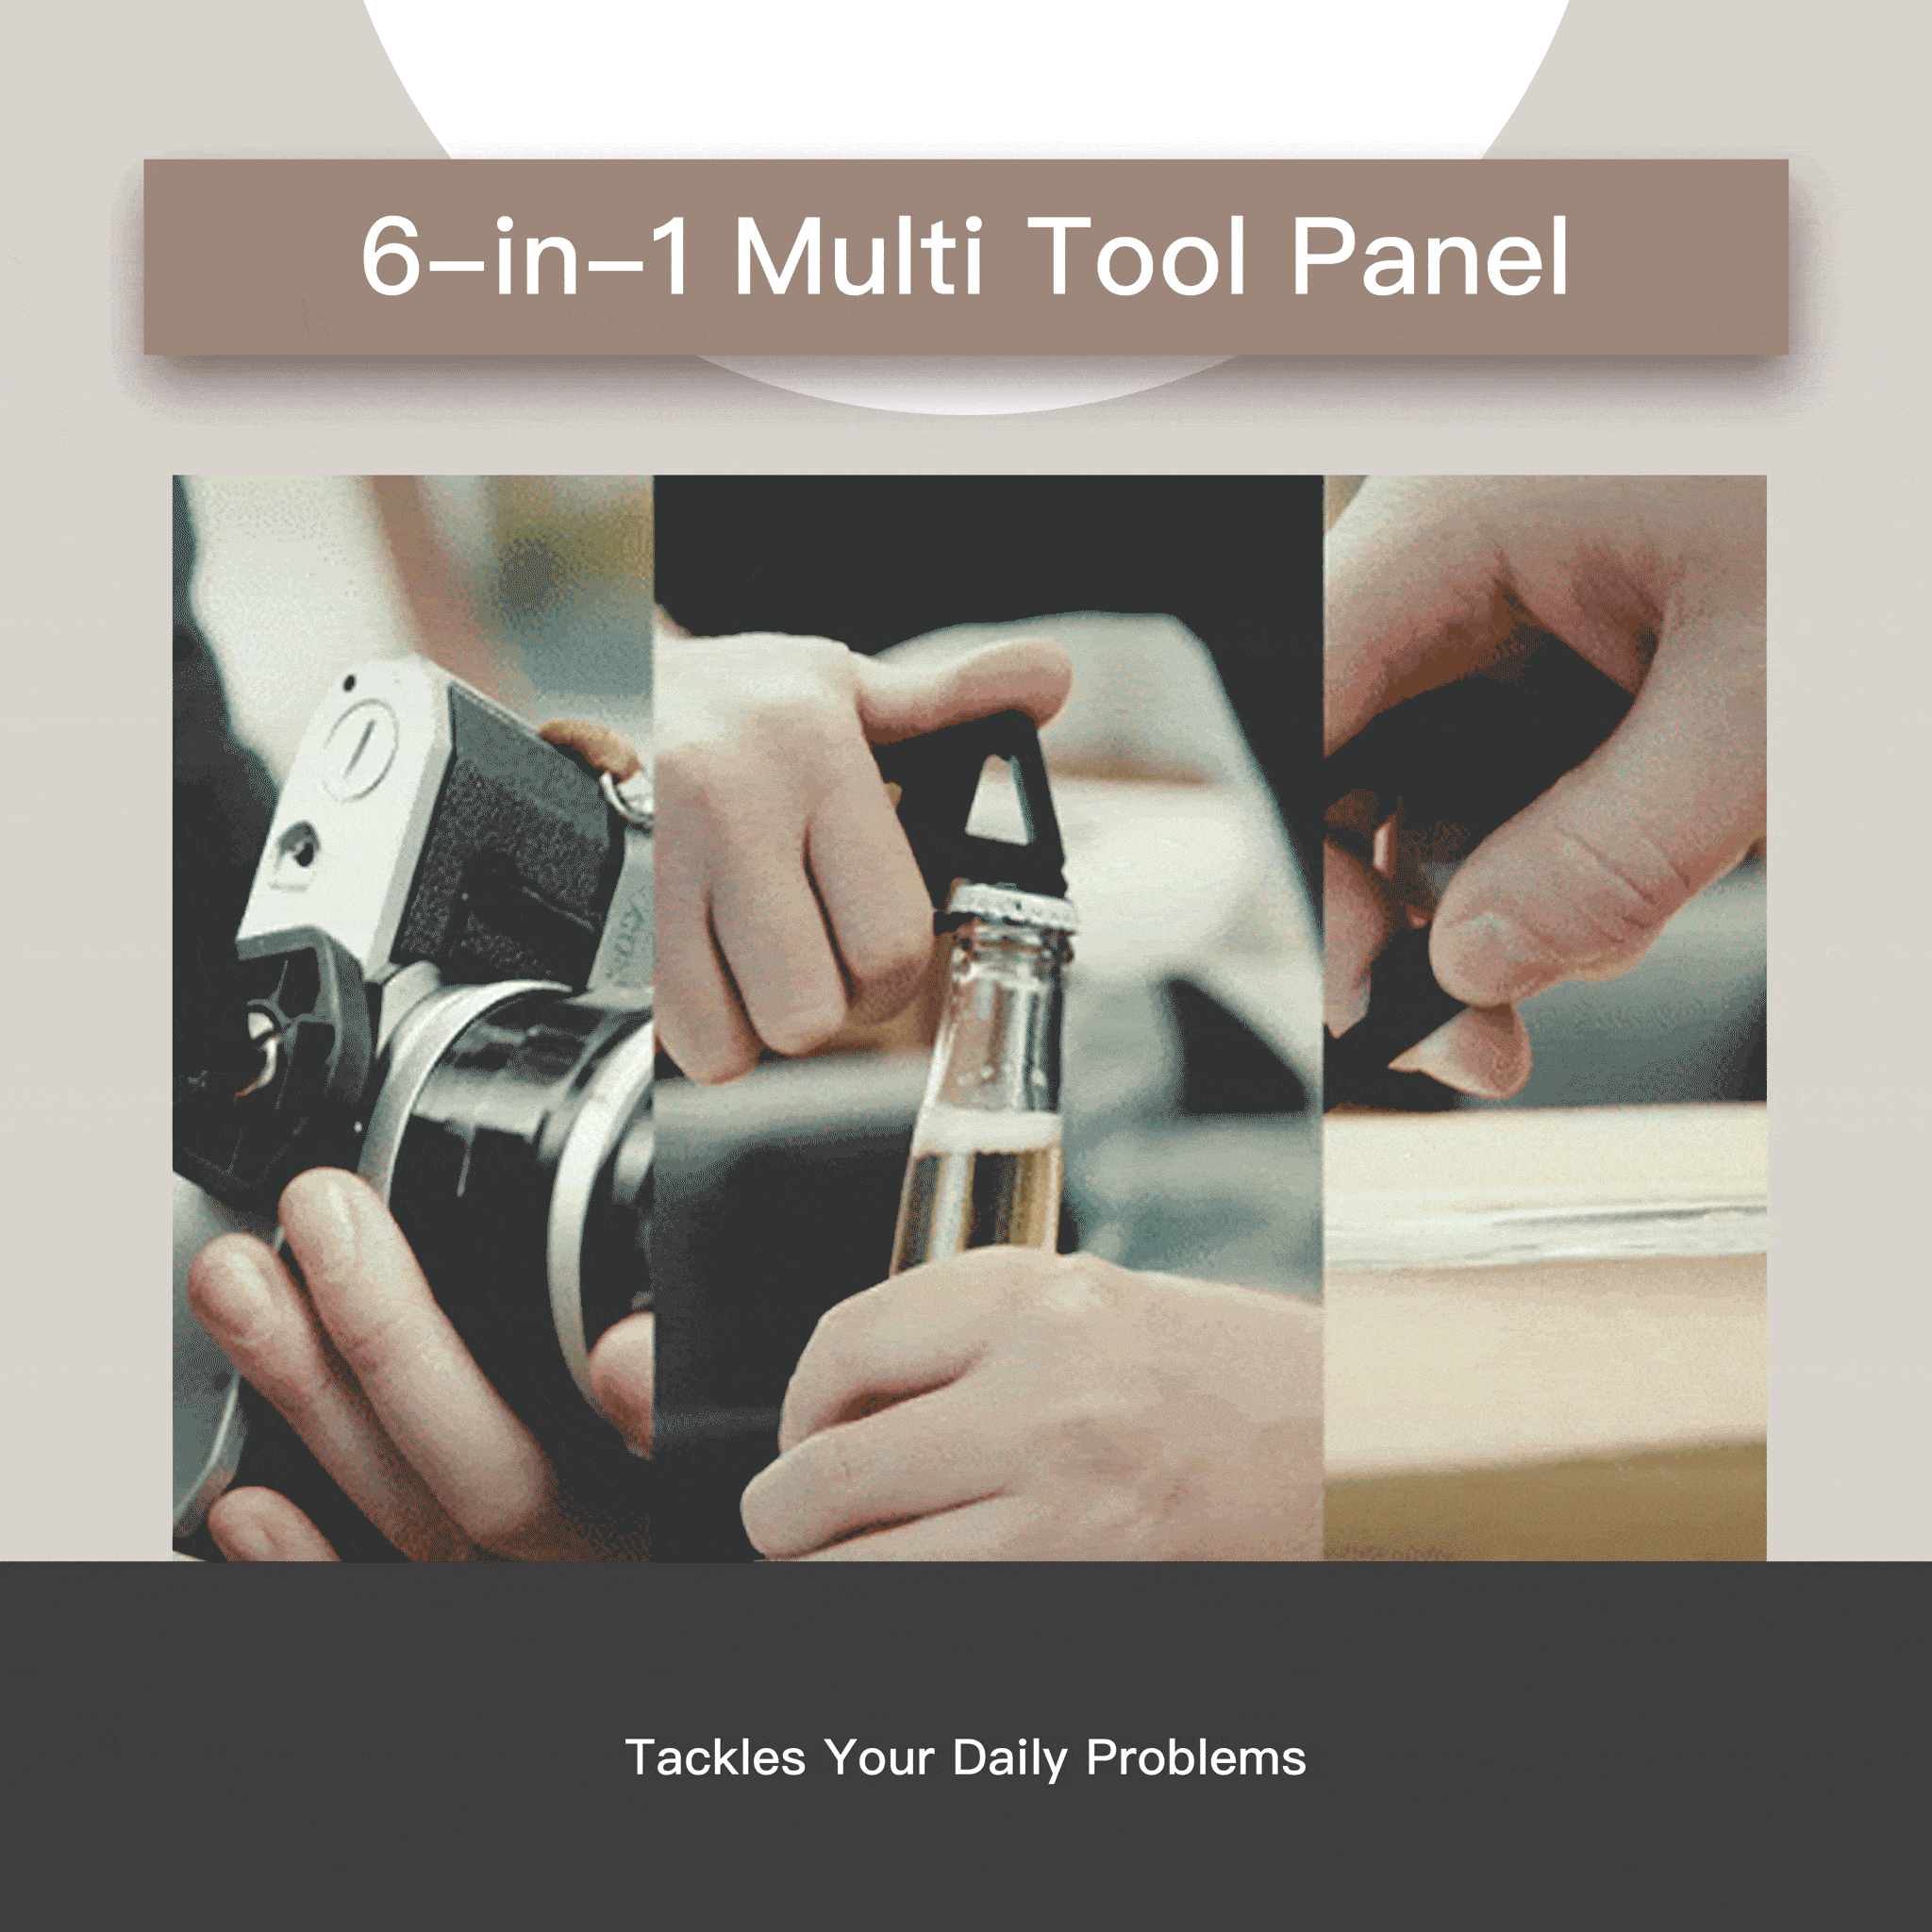 6-in-1 Multi Tool Panel